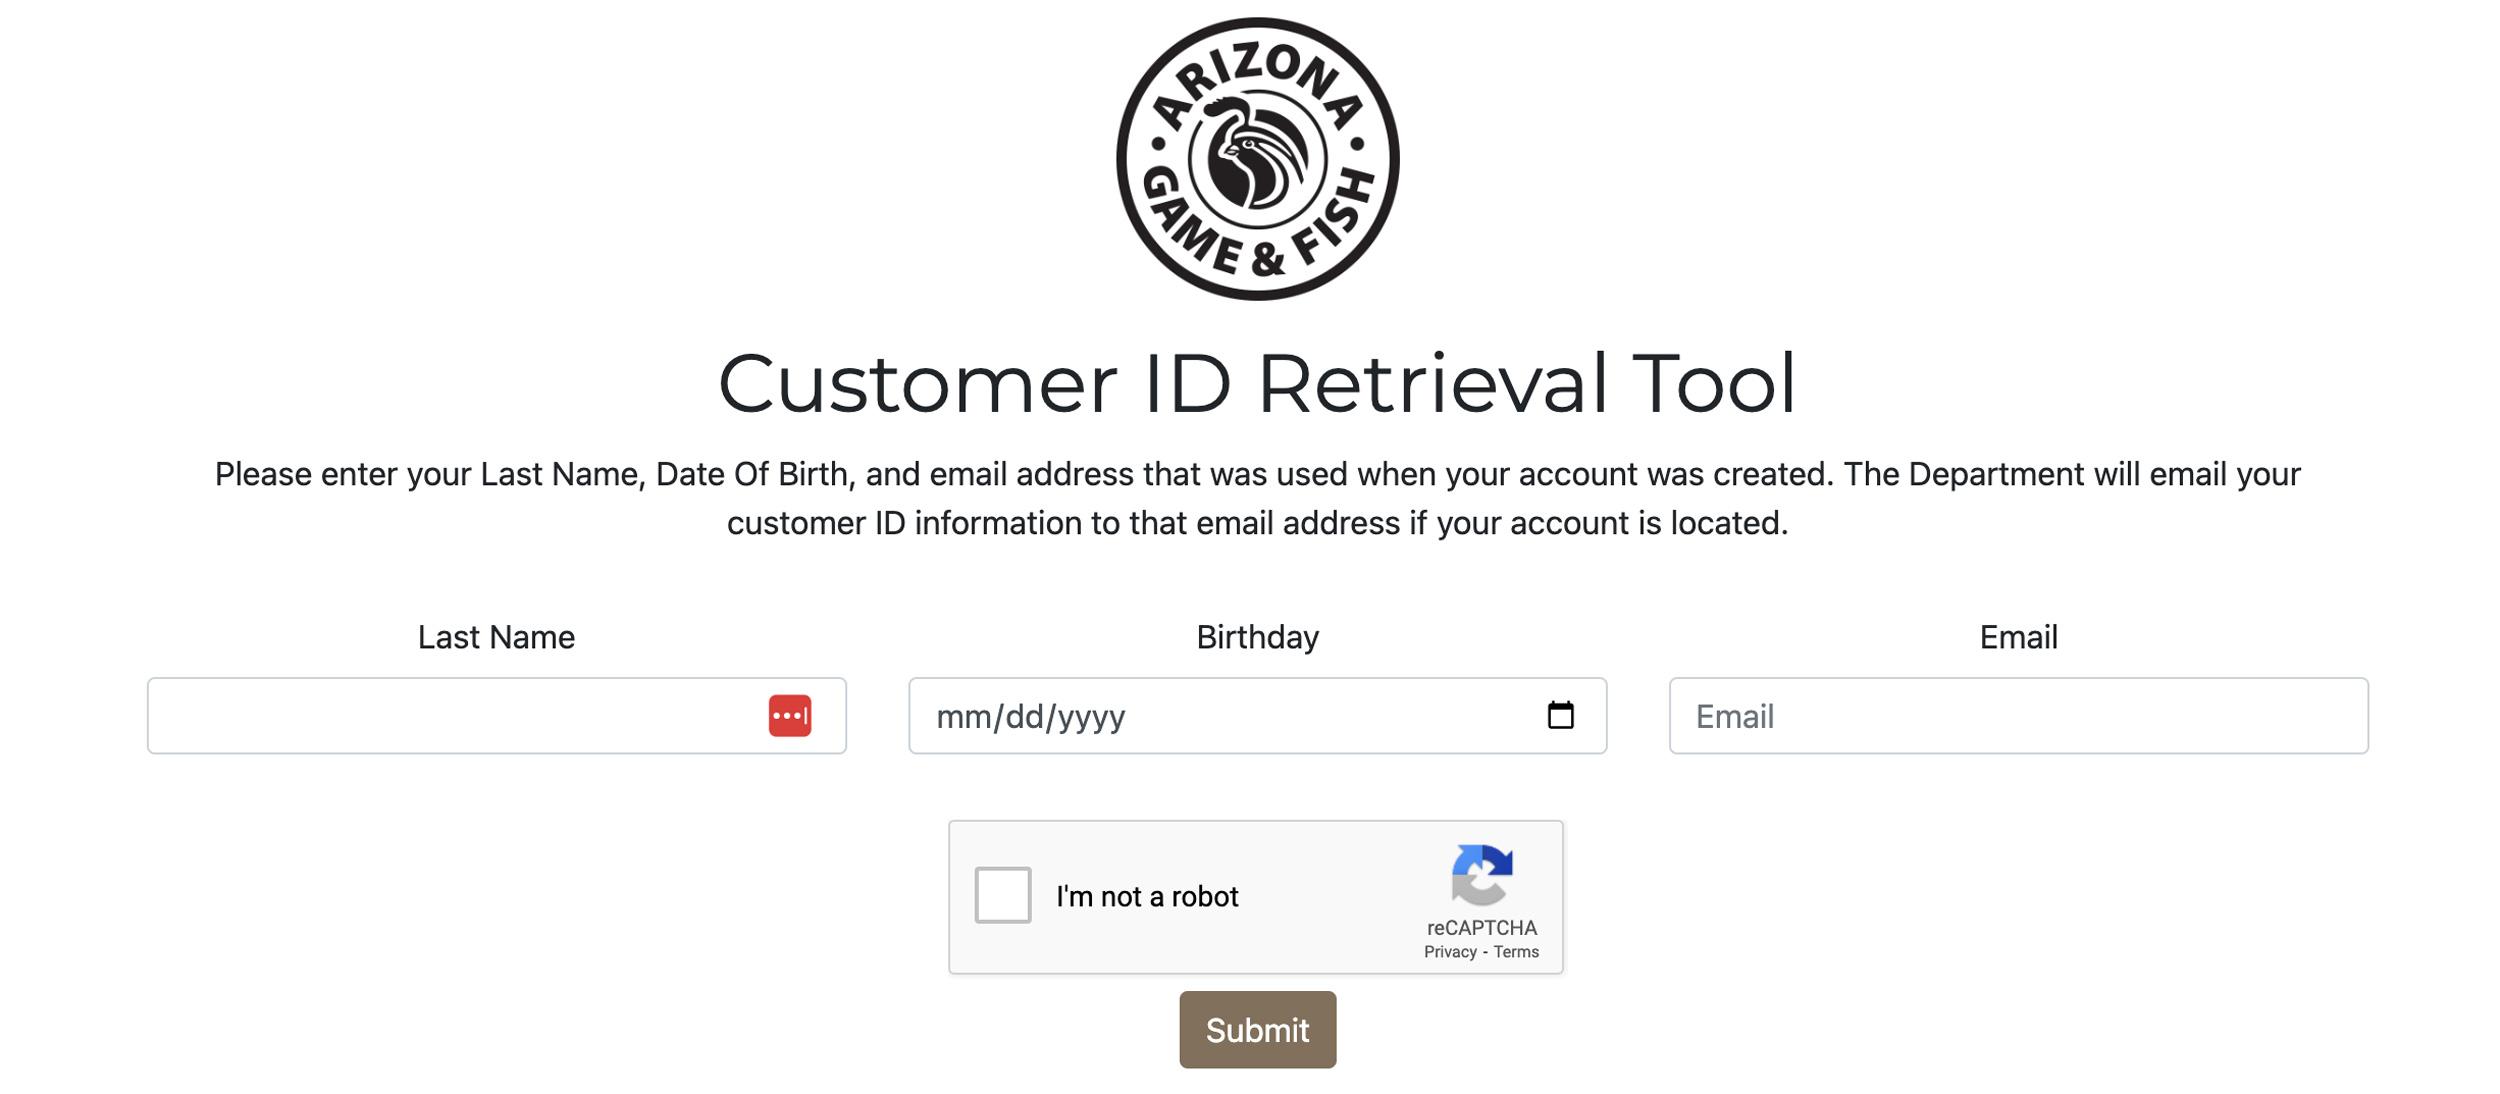 Customer ID retrieval tool to look up your Arizona account information